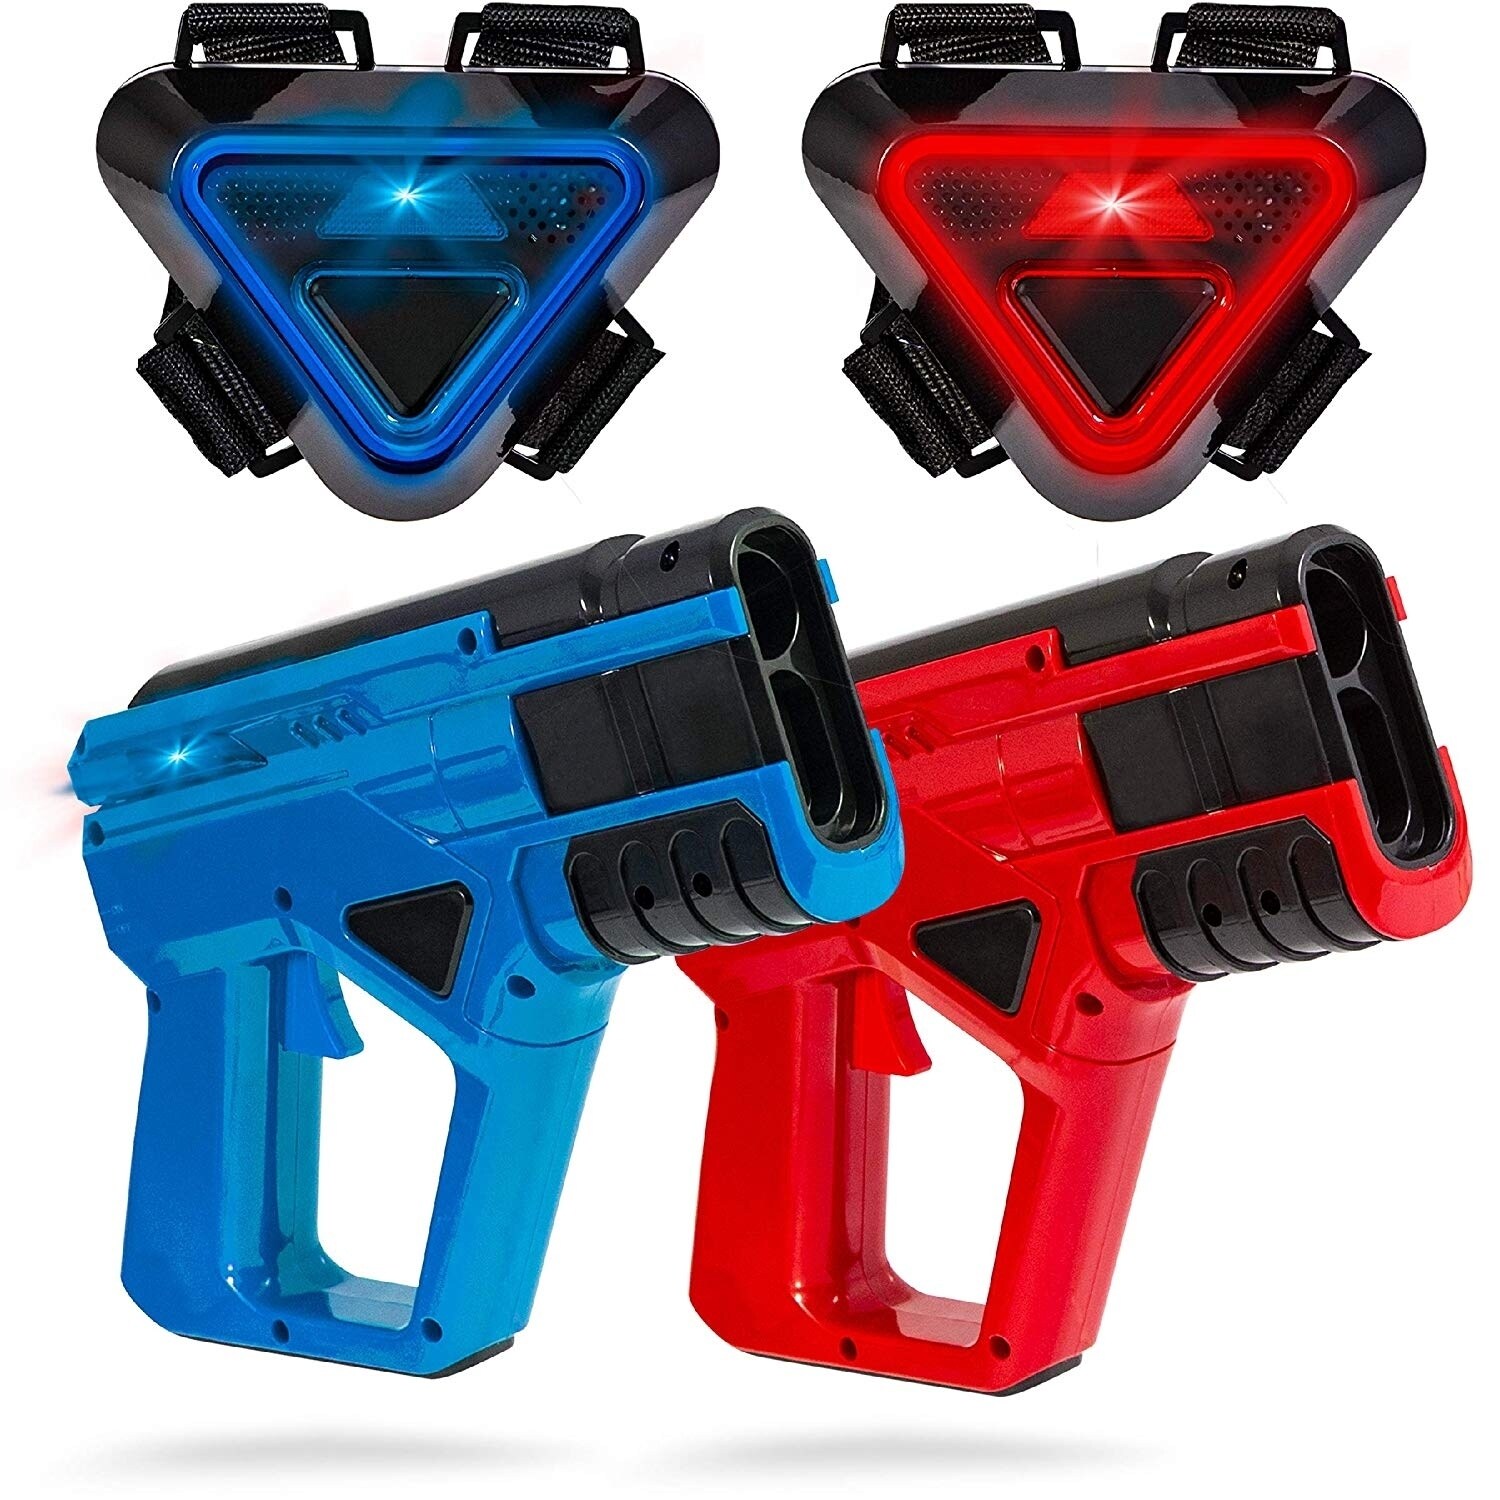 sharper image toy laser tag shooting game